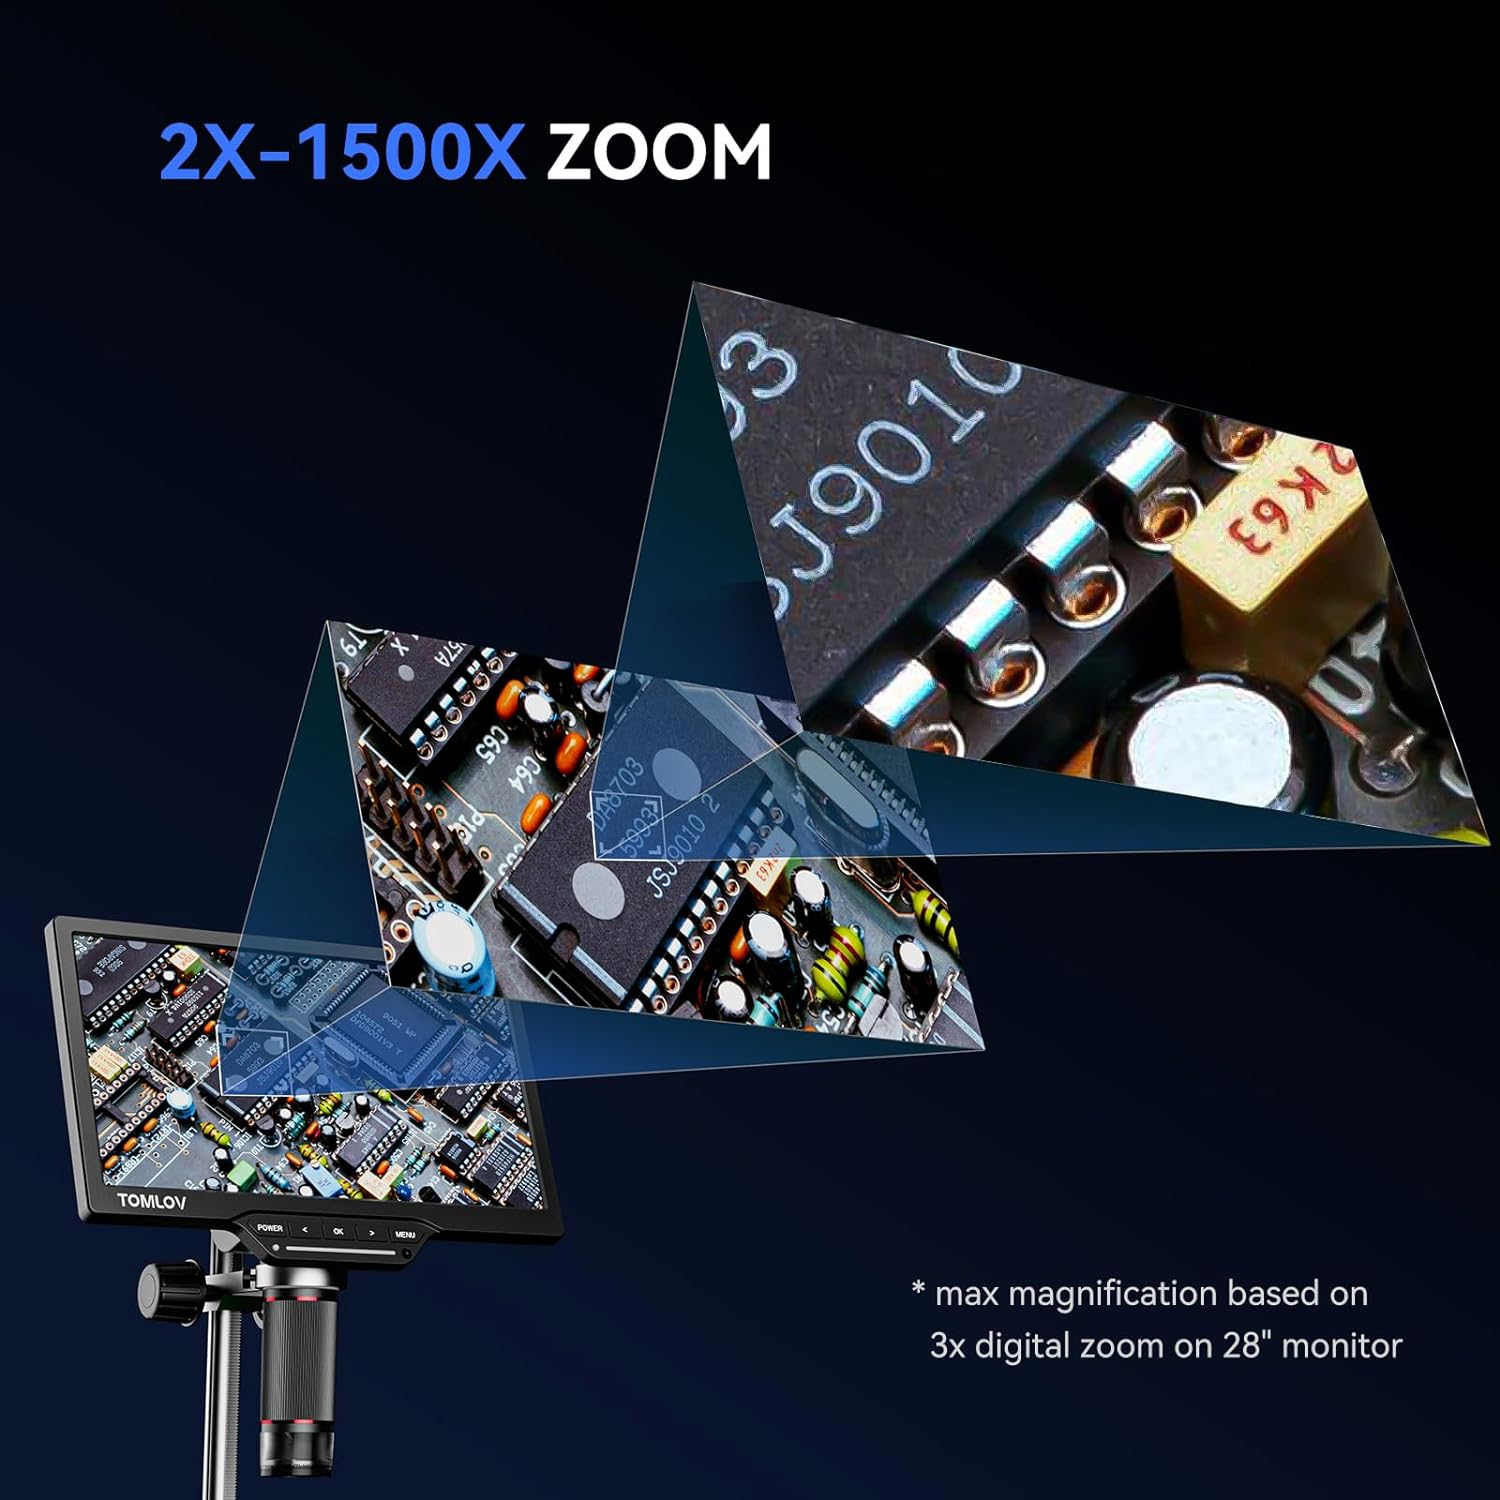 TOMLOV DM202 Microscopio, Microscopio Digital LCD de 10,1" HDMI